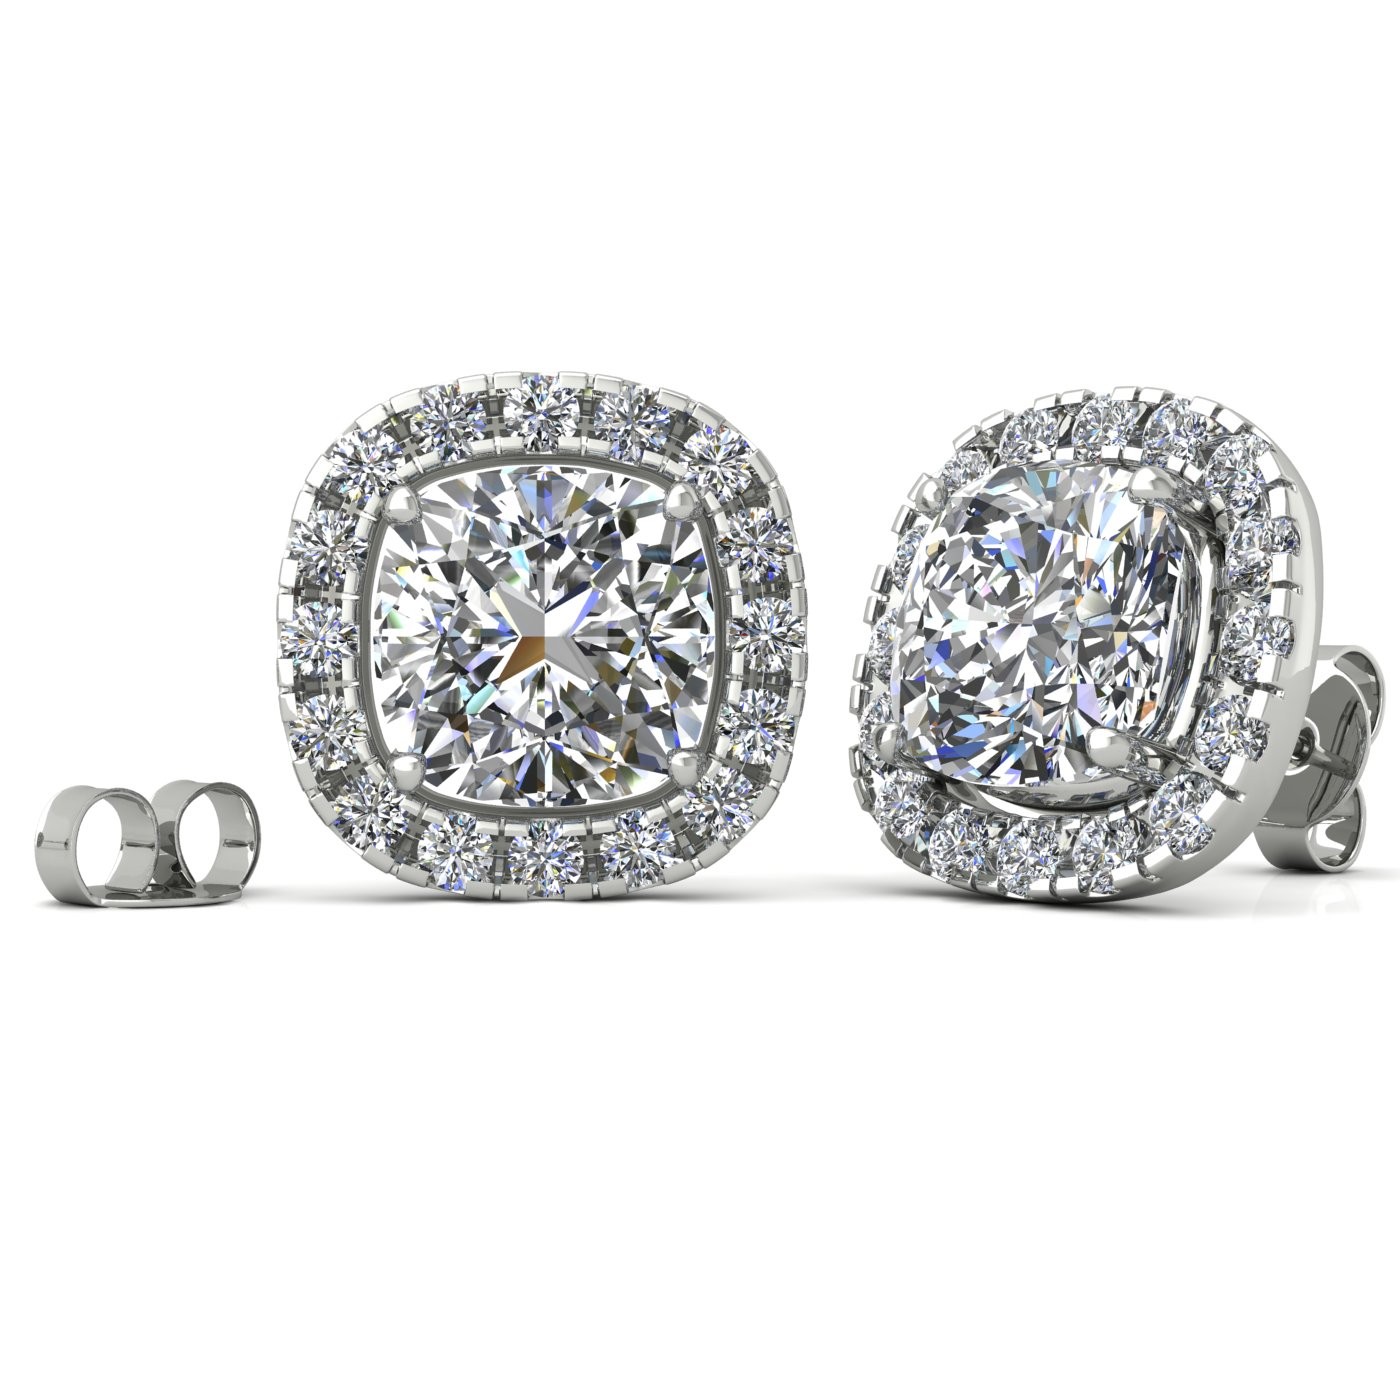 18k white gold  2,5 ct each (5,0 tcw) 4 prongs cushion shape diamond earrings with diamond pavÉ set halo